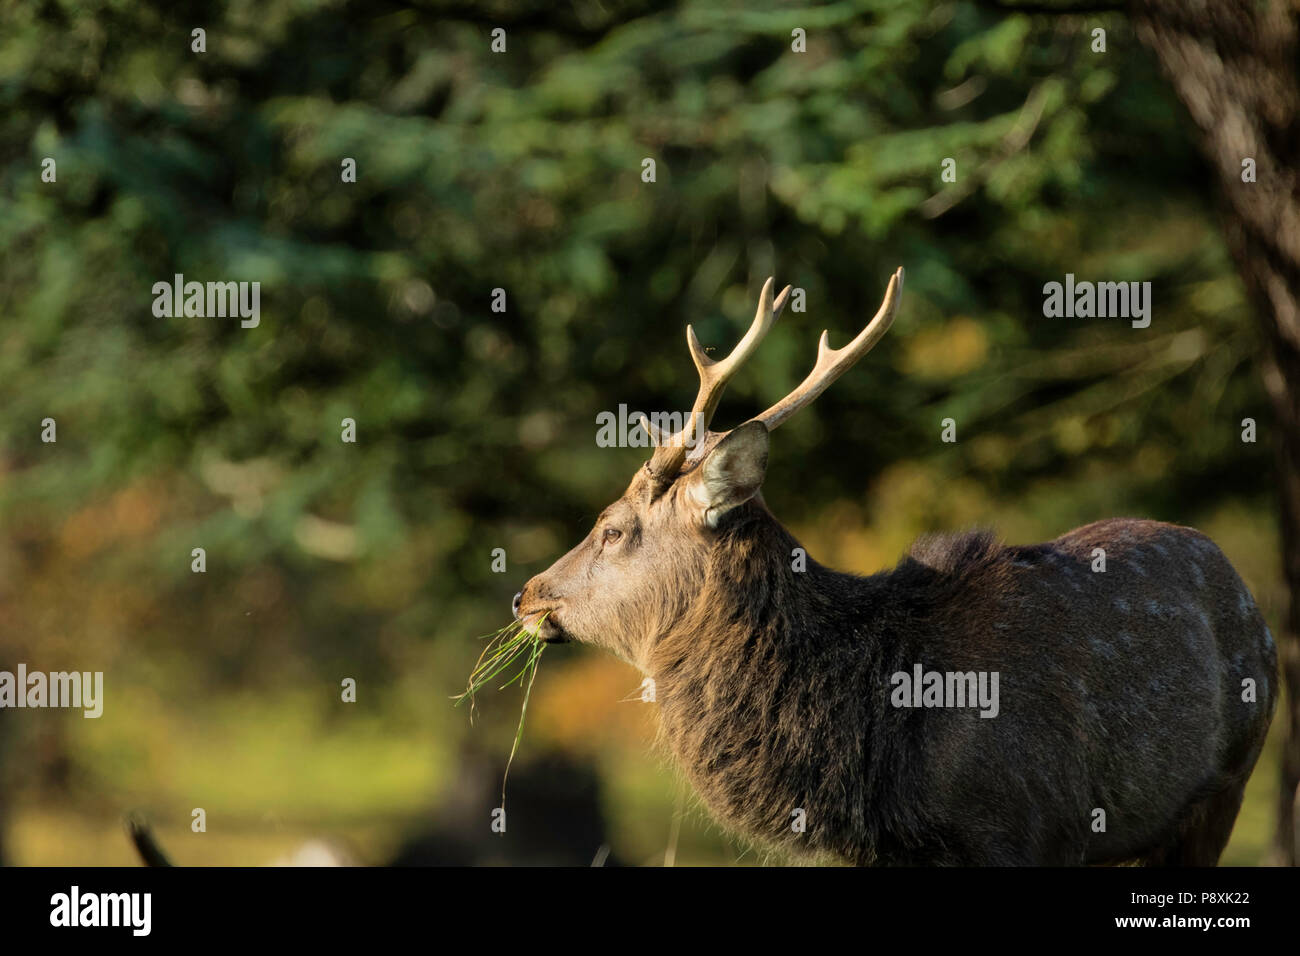 Mature Sika Deer Stag eating grass at Studley Royal Deer Park,Ripon,North Yorkshire,England,UK. Stock Photo